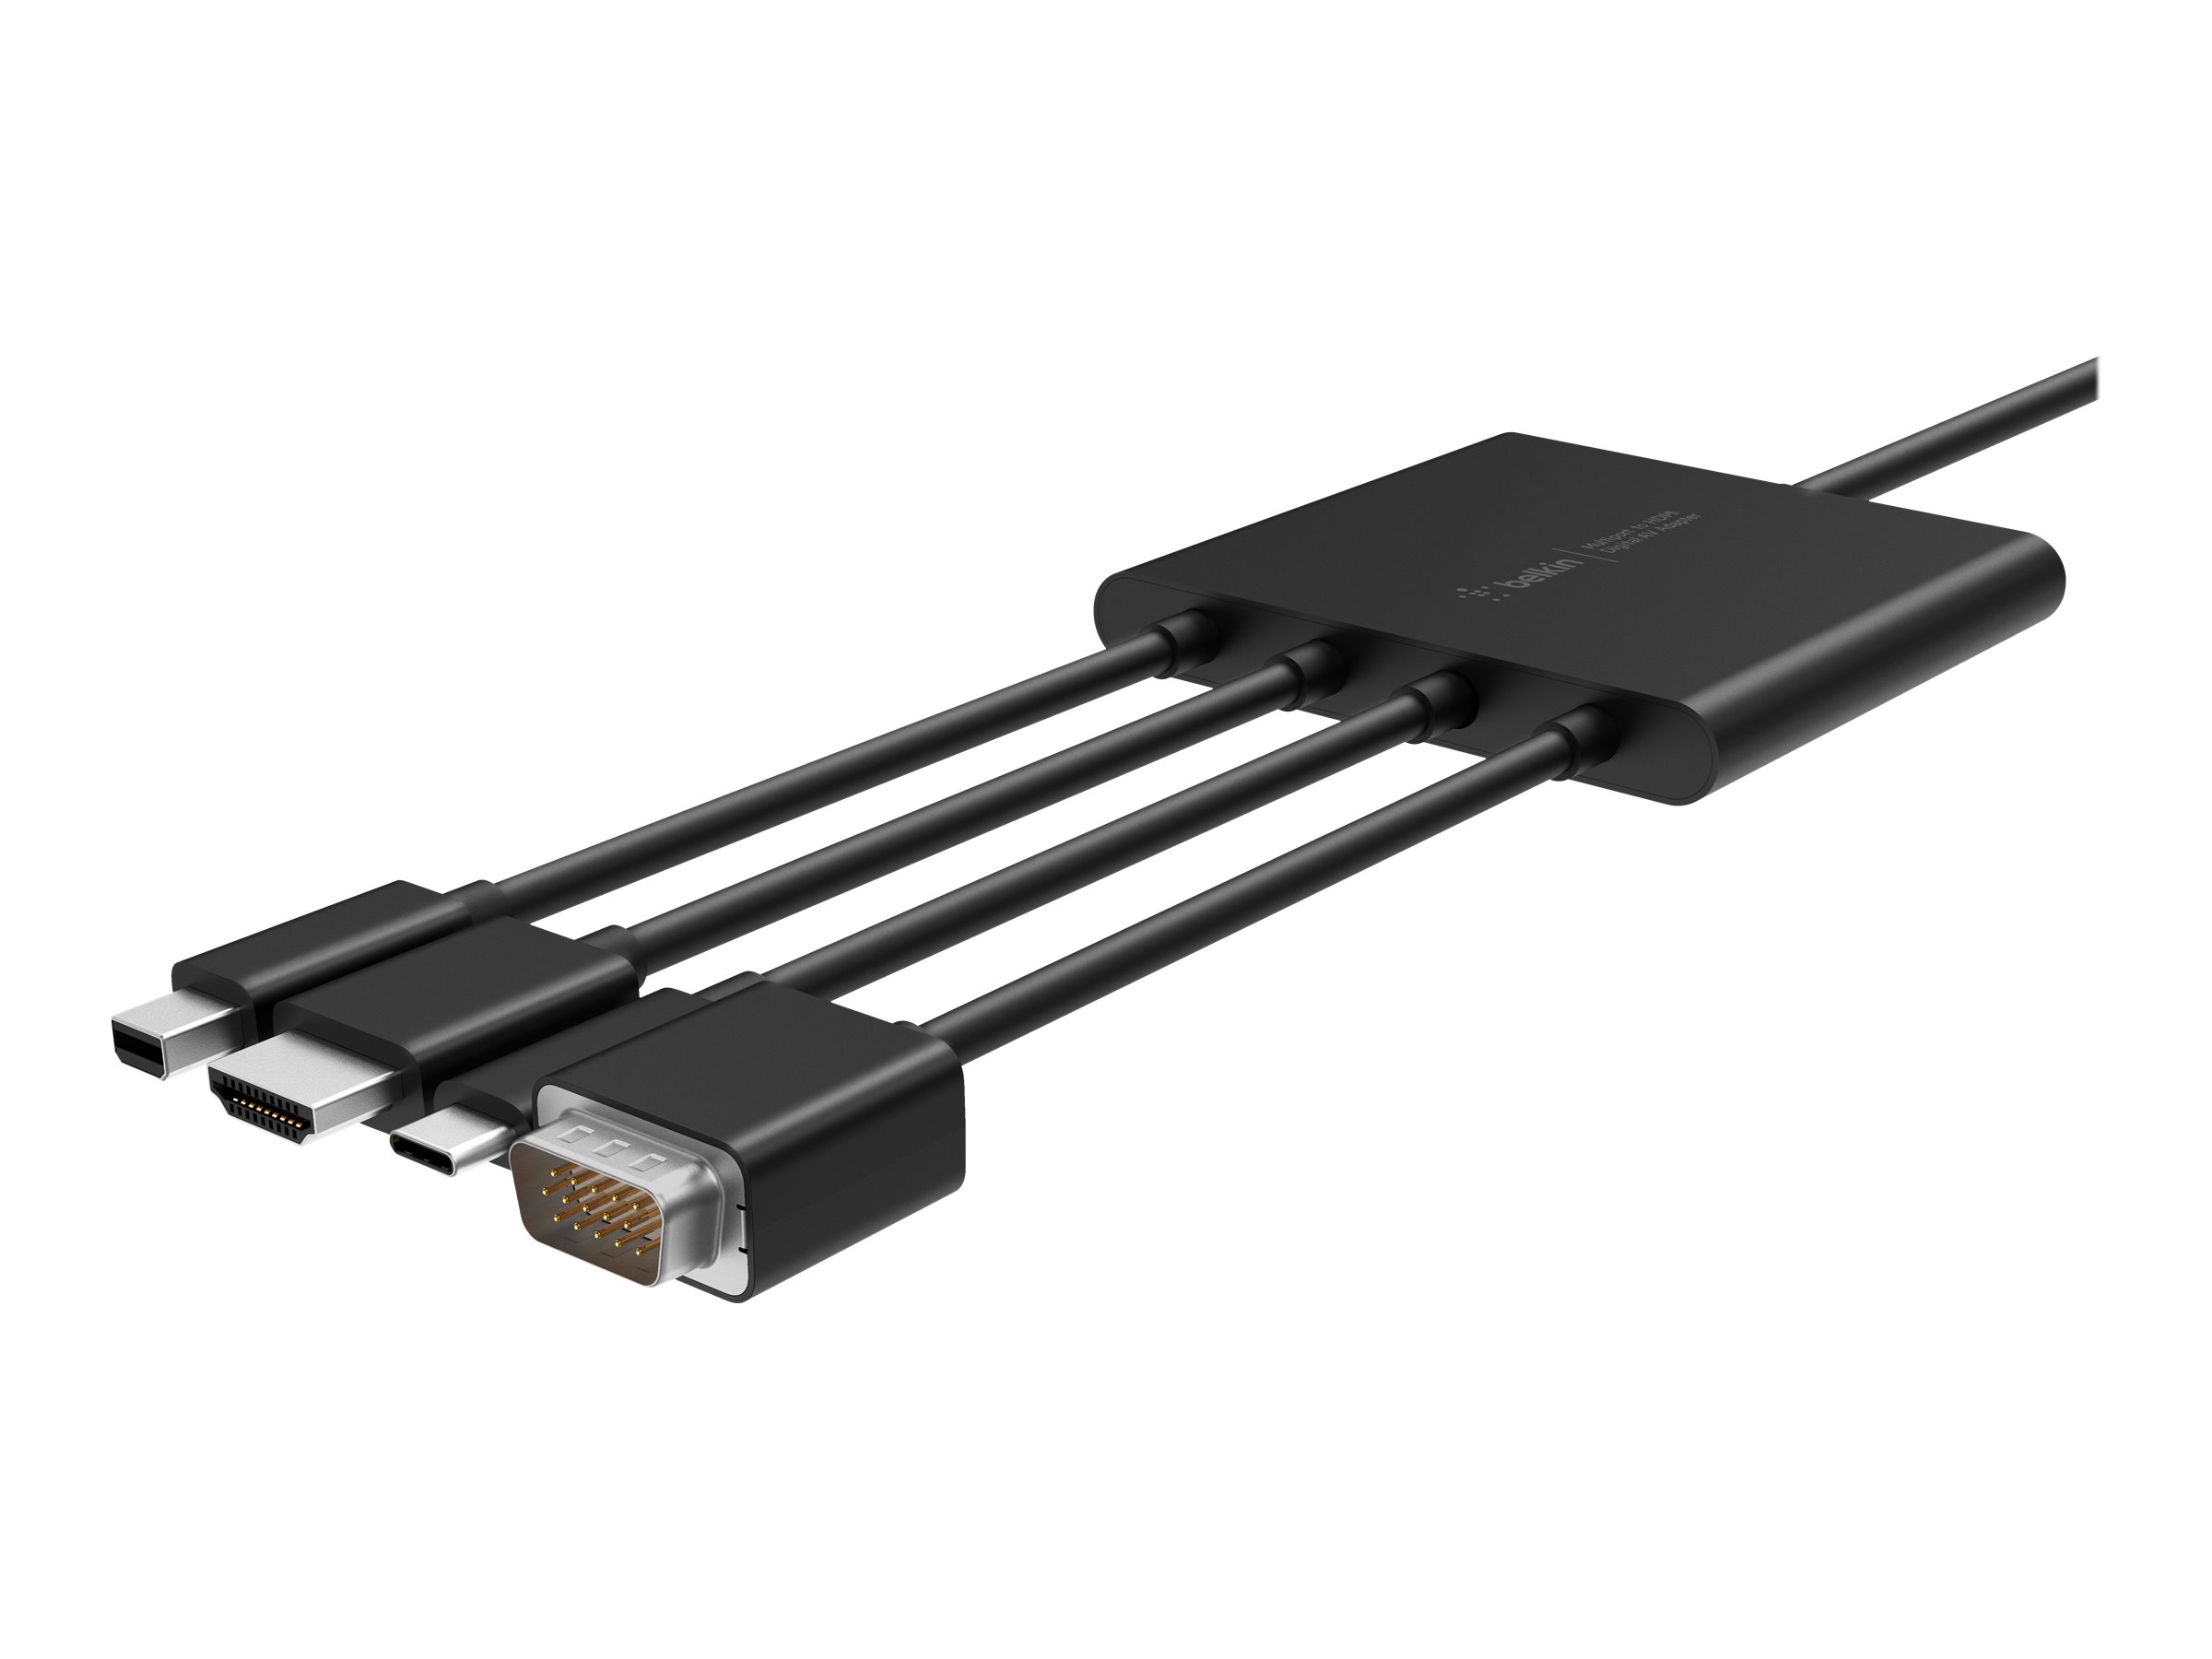 Belkin Multiport to HDMI Digital AV Adapter - Video- / Audiokabel - HD-15 (VGA), HDMI, Mini DisplayPort, 24 pin USB-C männlich zu USB, HDMI männlich - 2.4 m - 4K Unterstützung